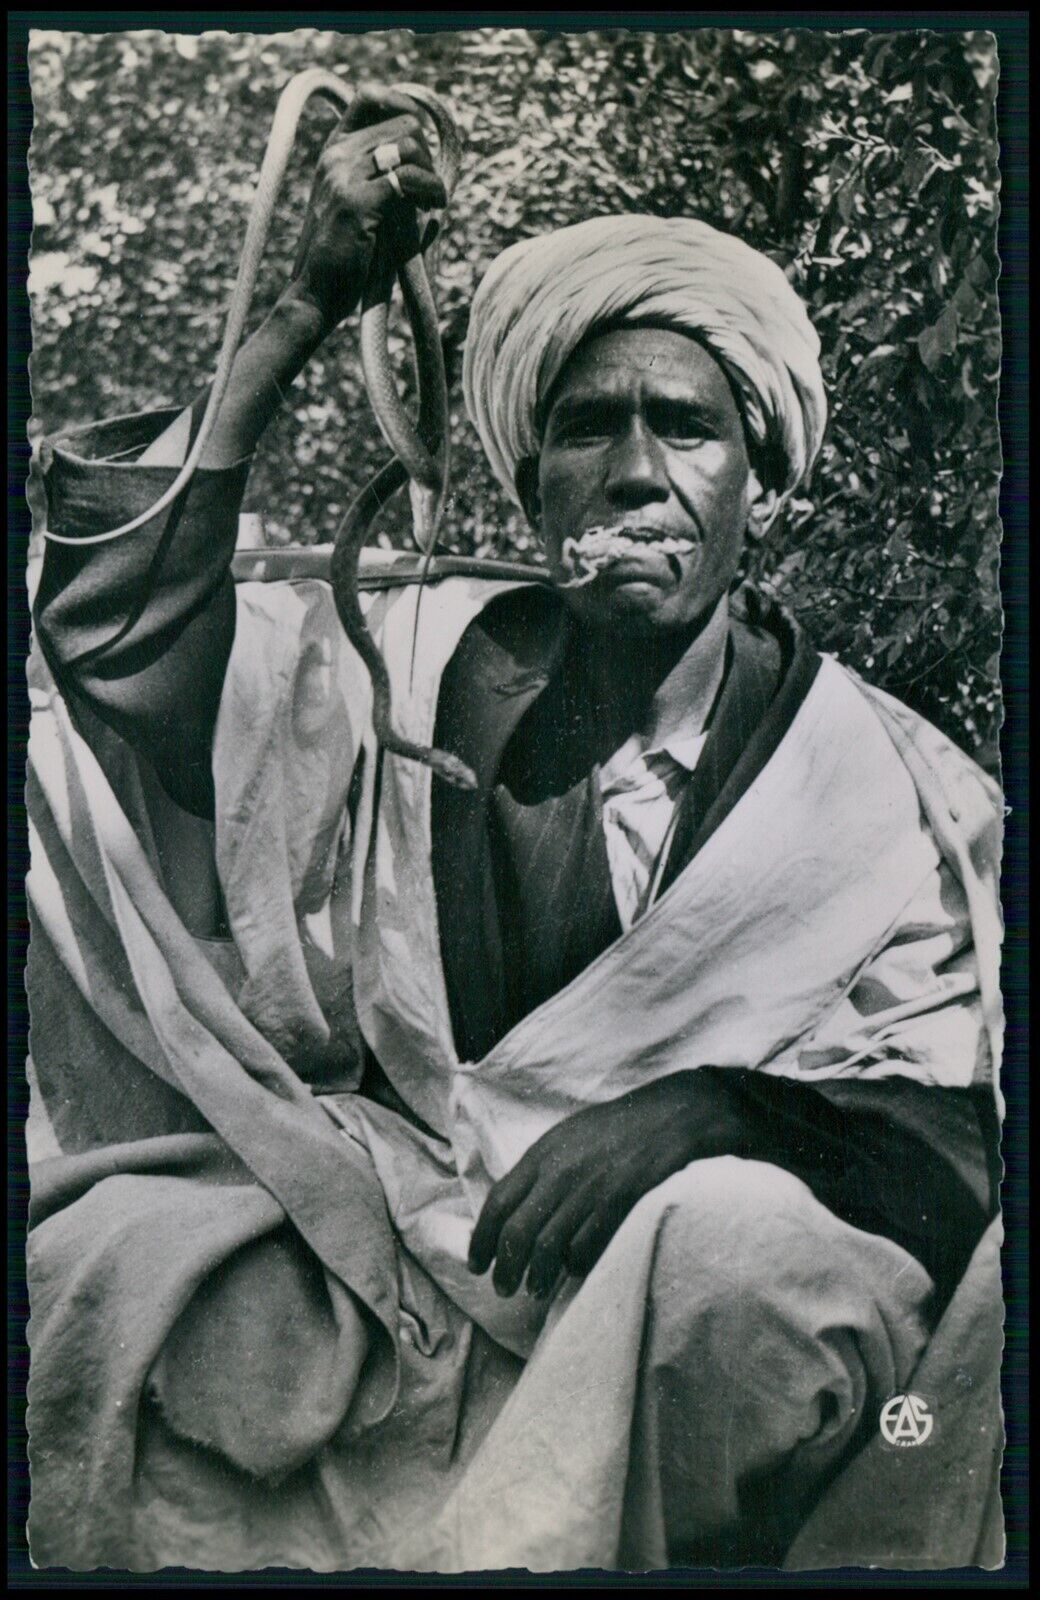 Ethnic arab North Africa snake charmer original c1930s photo postcard